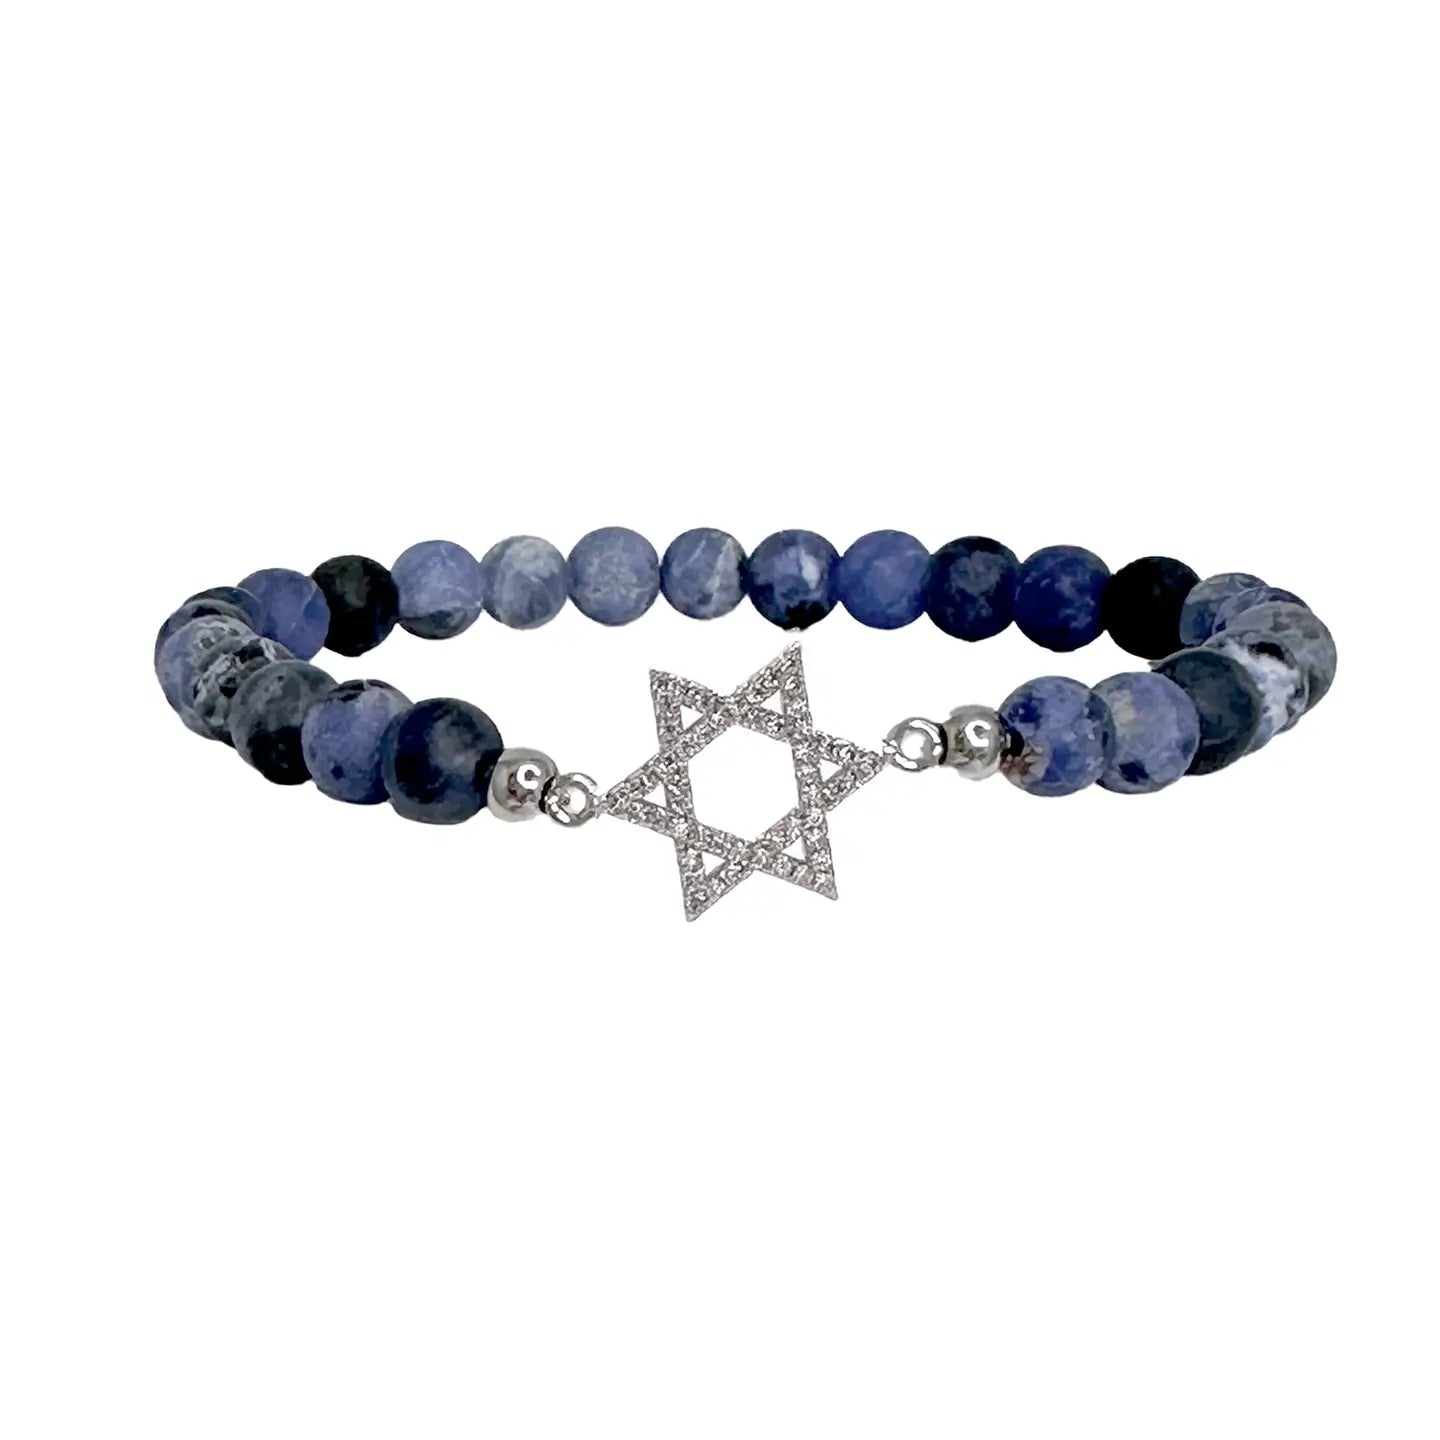 Blue/Silver Star of David bracelet